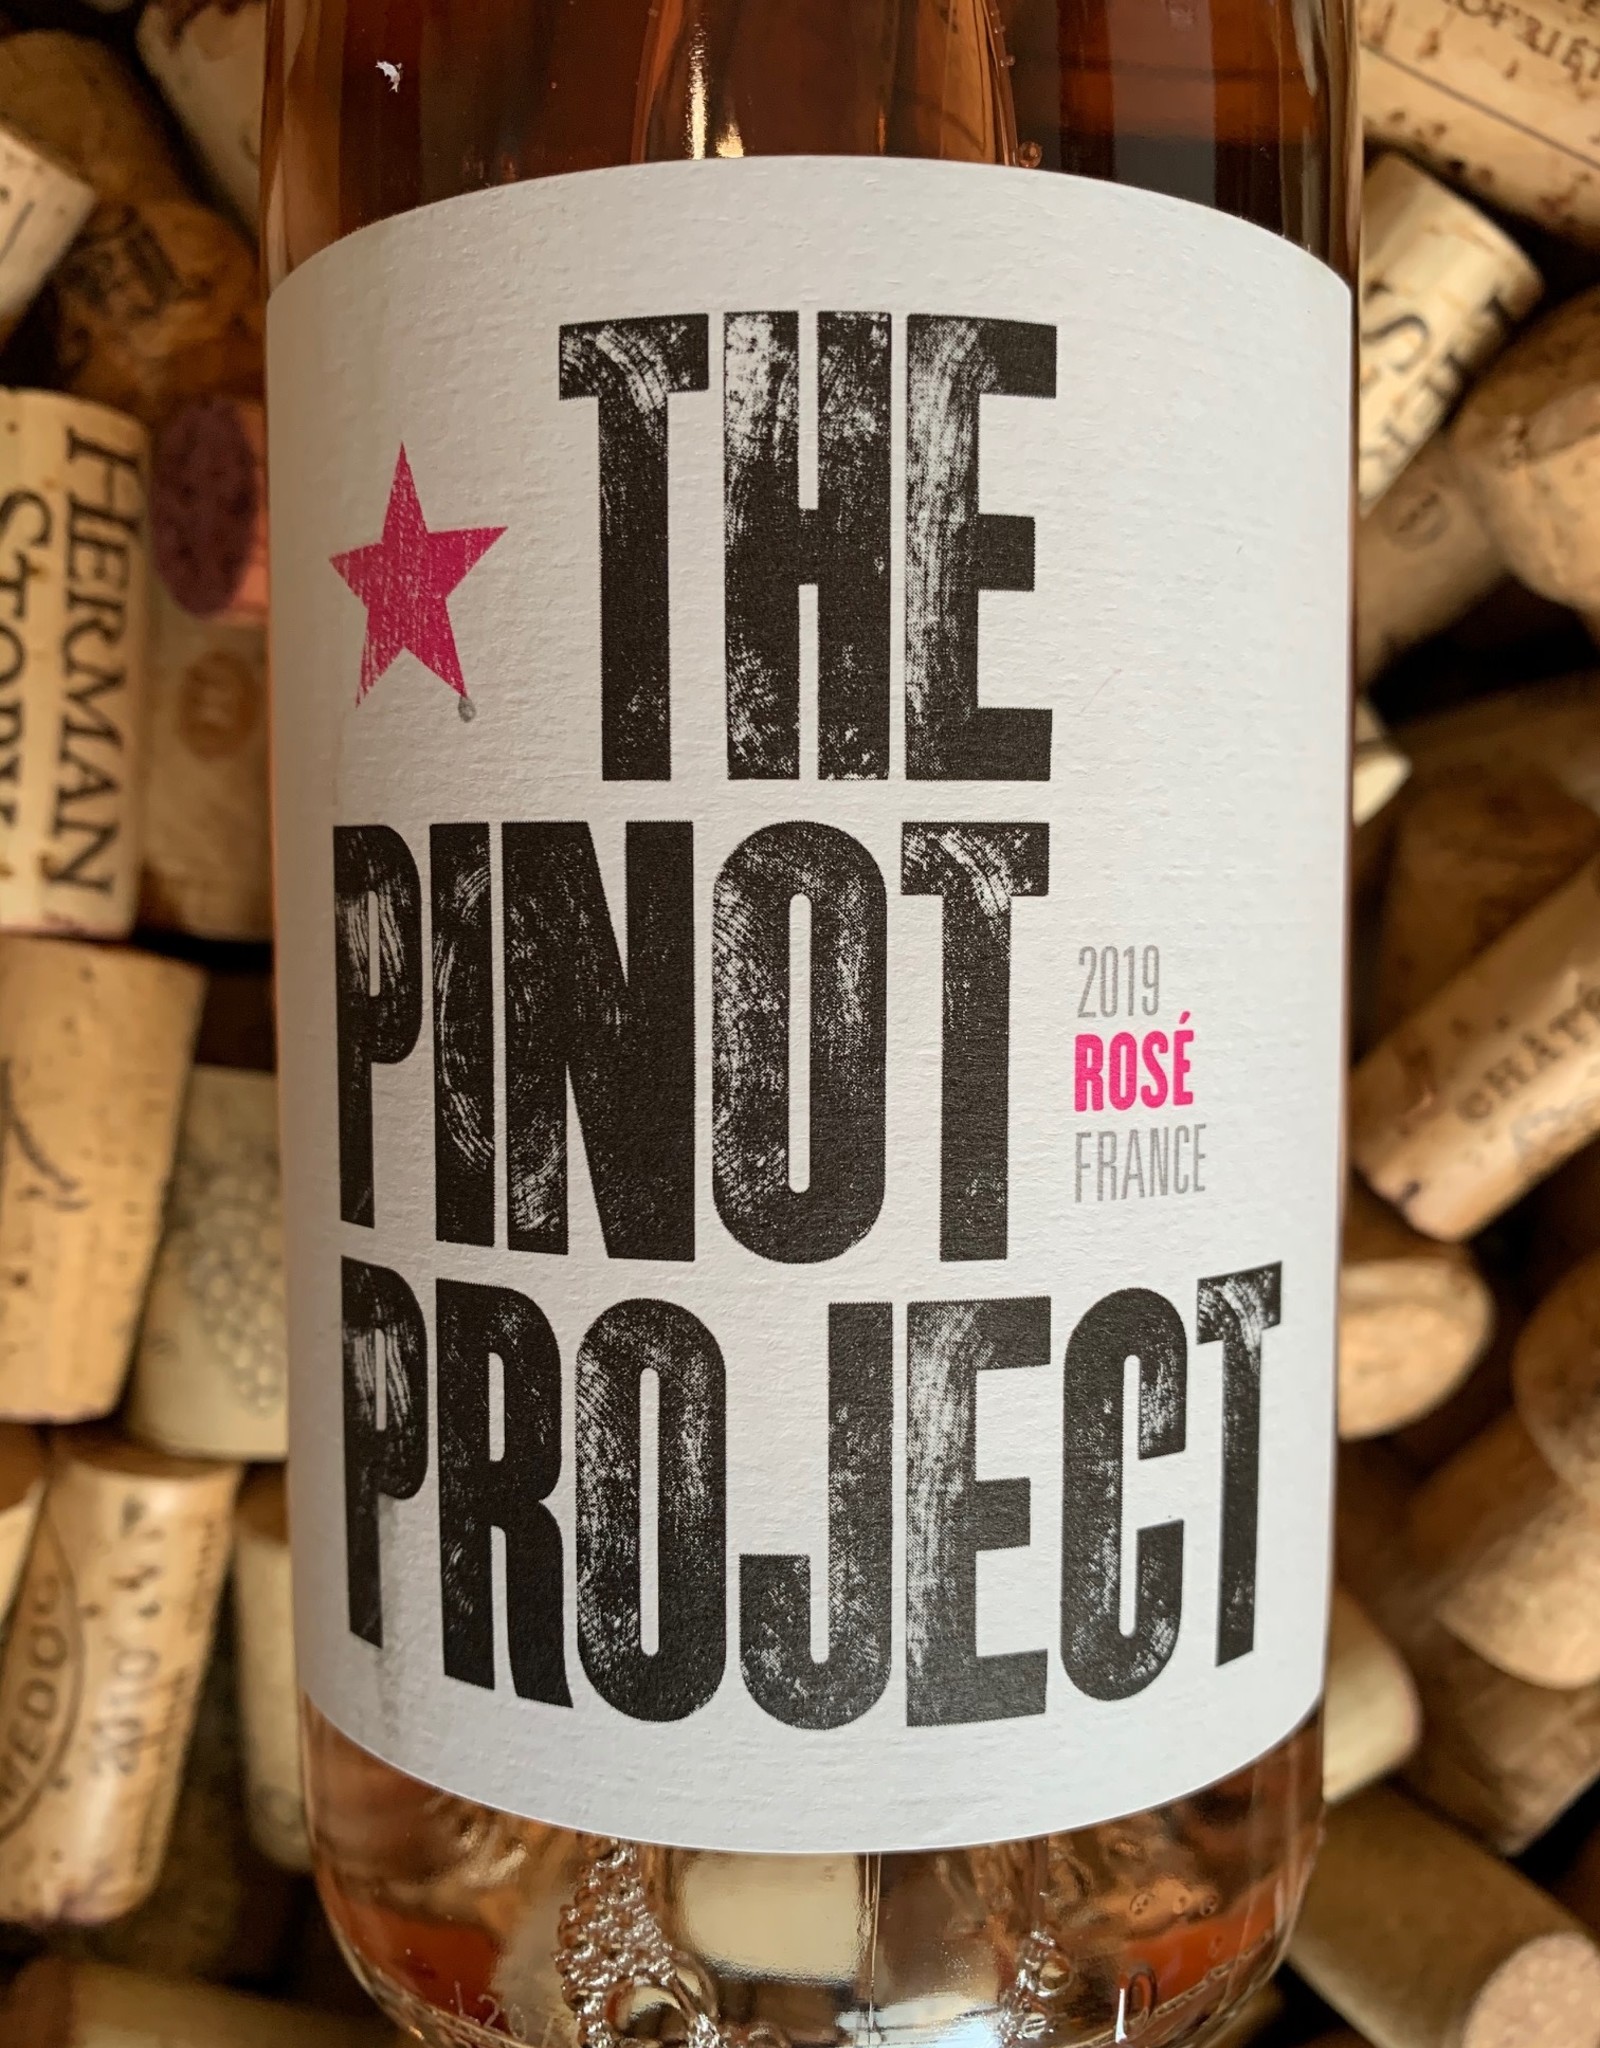 Skurnick Pinot Project Rosé